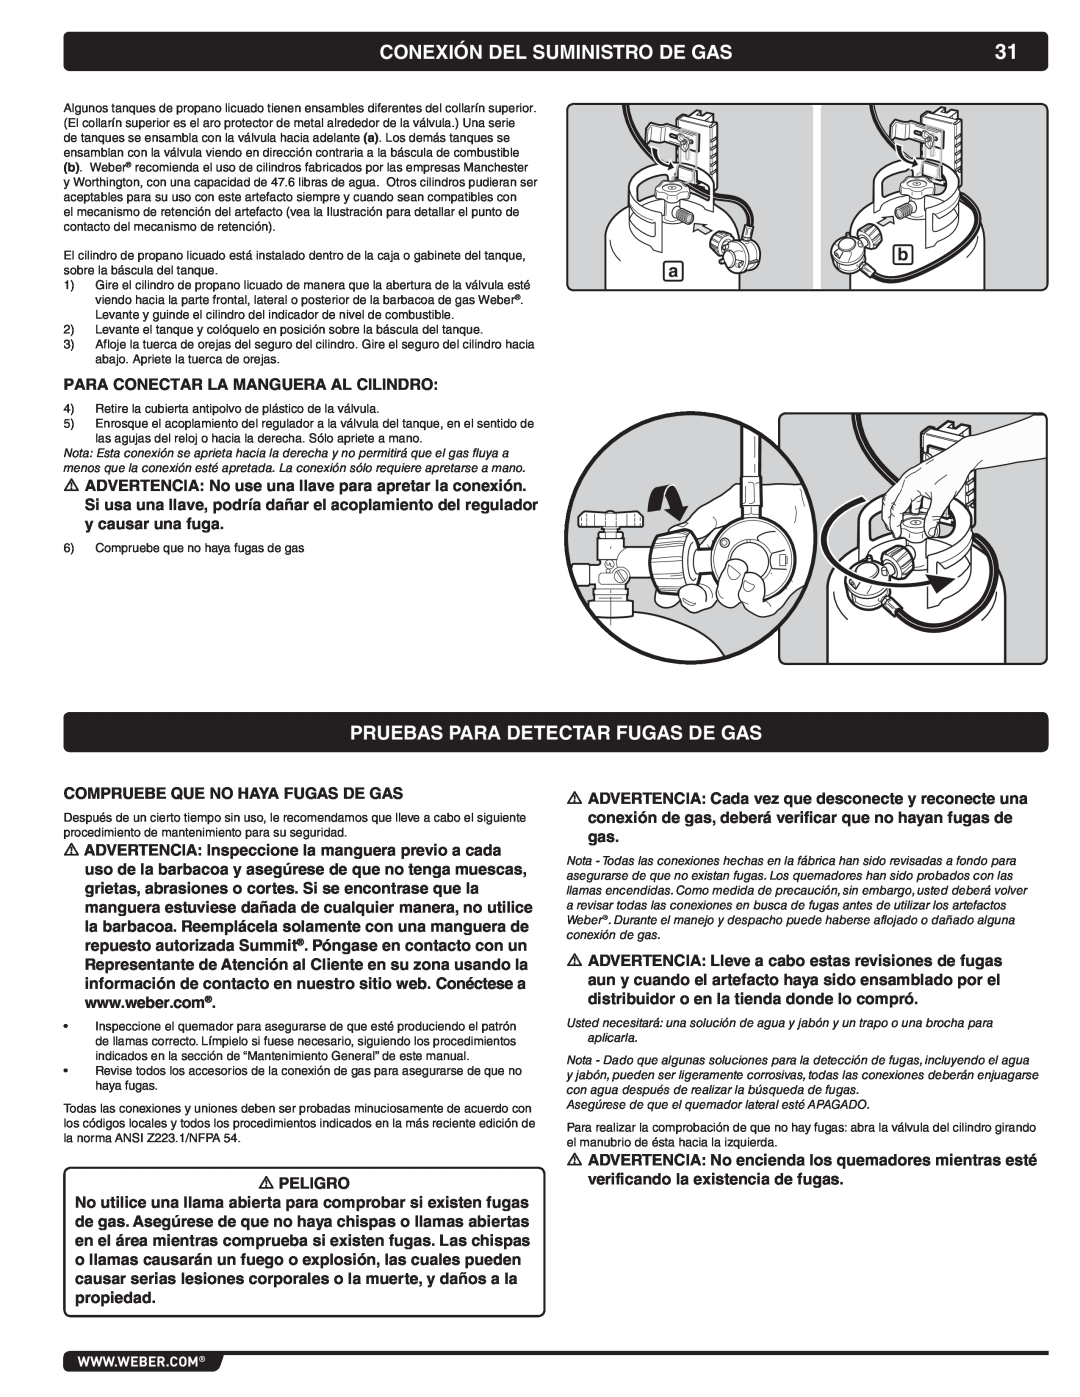 Weber 56069 manual Conexión Del Suministro De Gas, Pruebas Para Detectar Fugas De Gas 